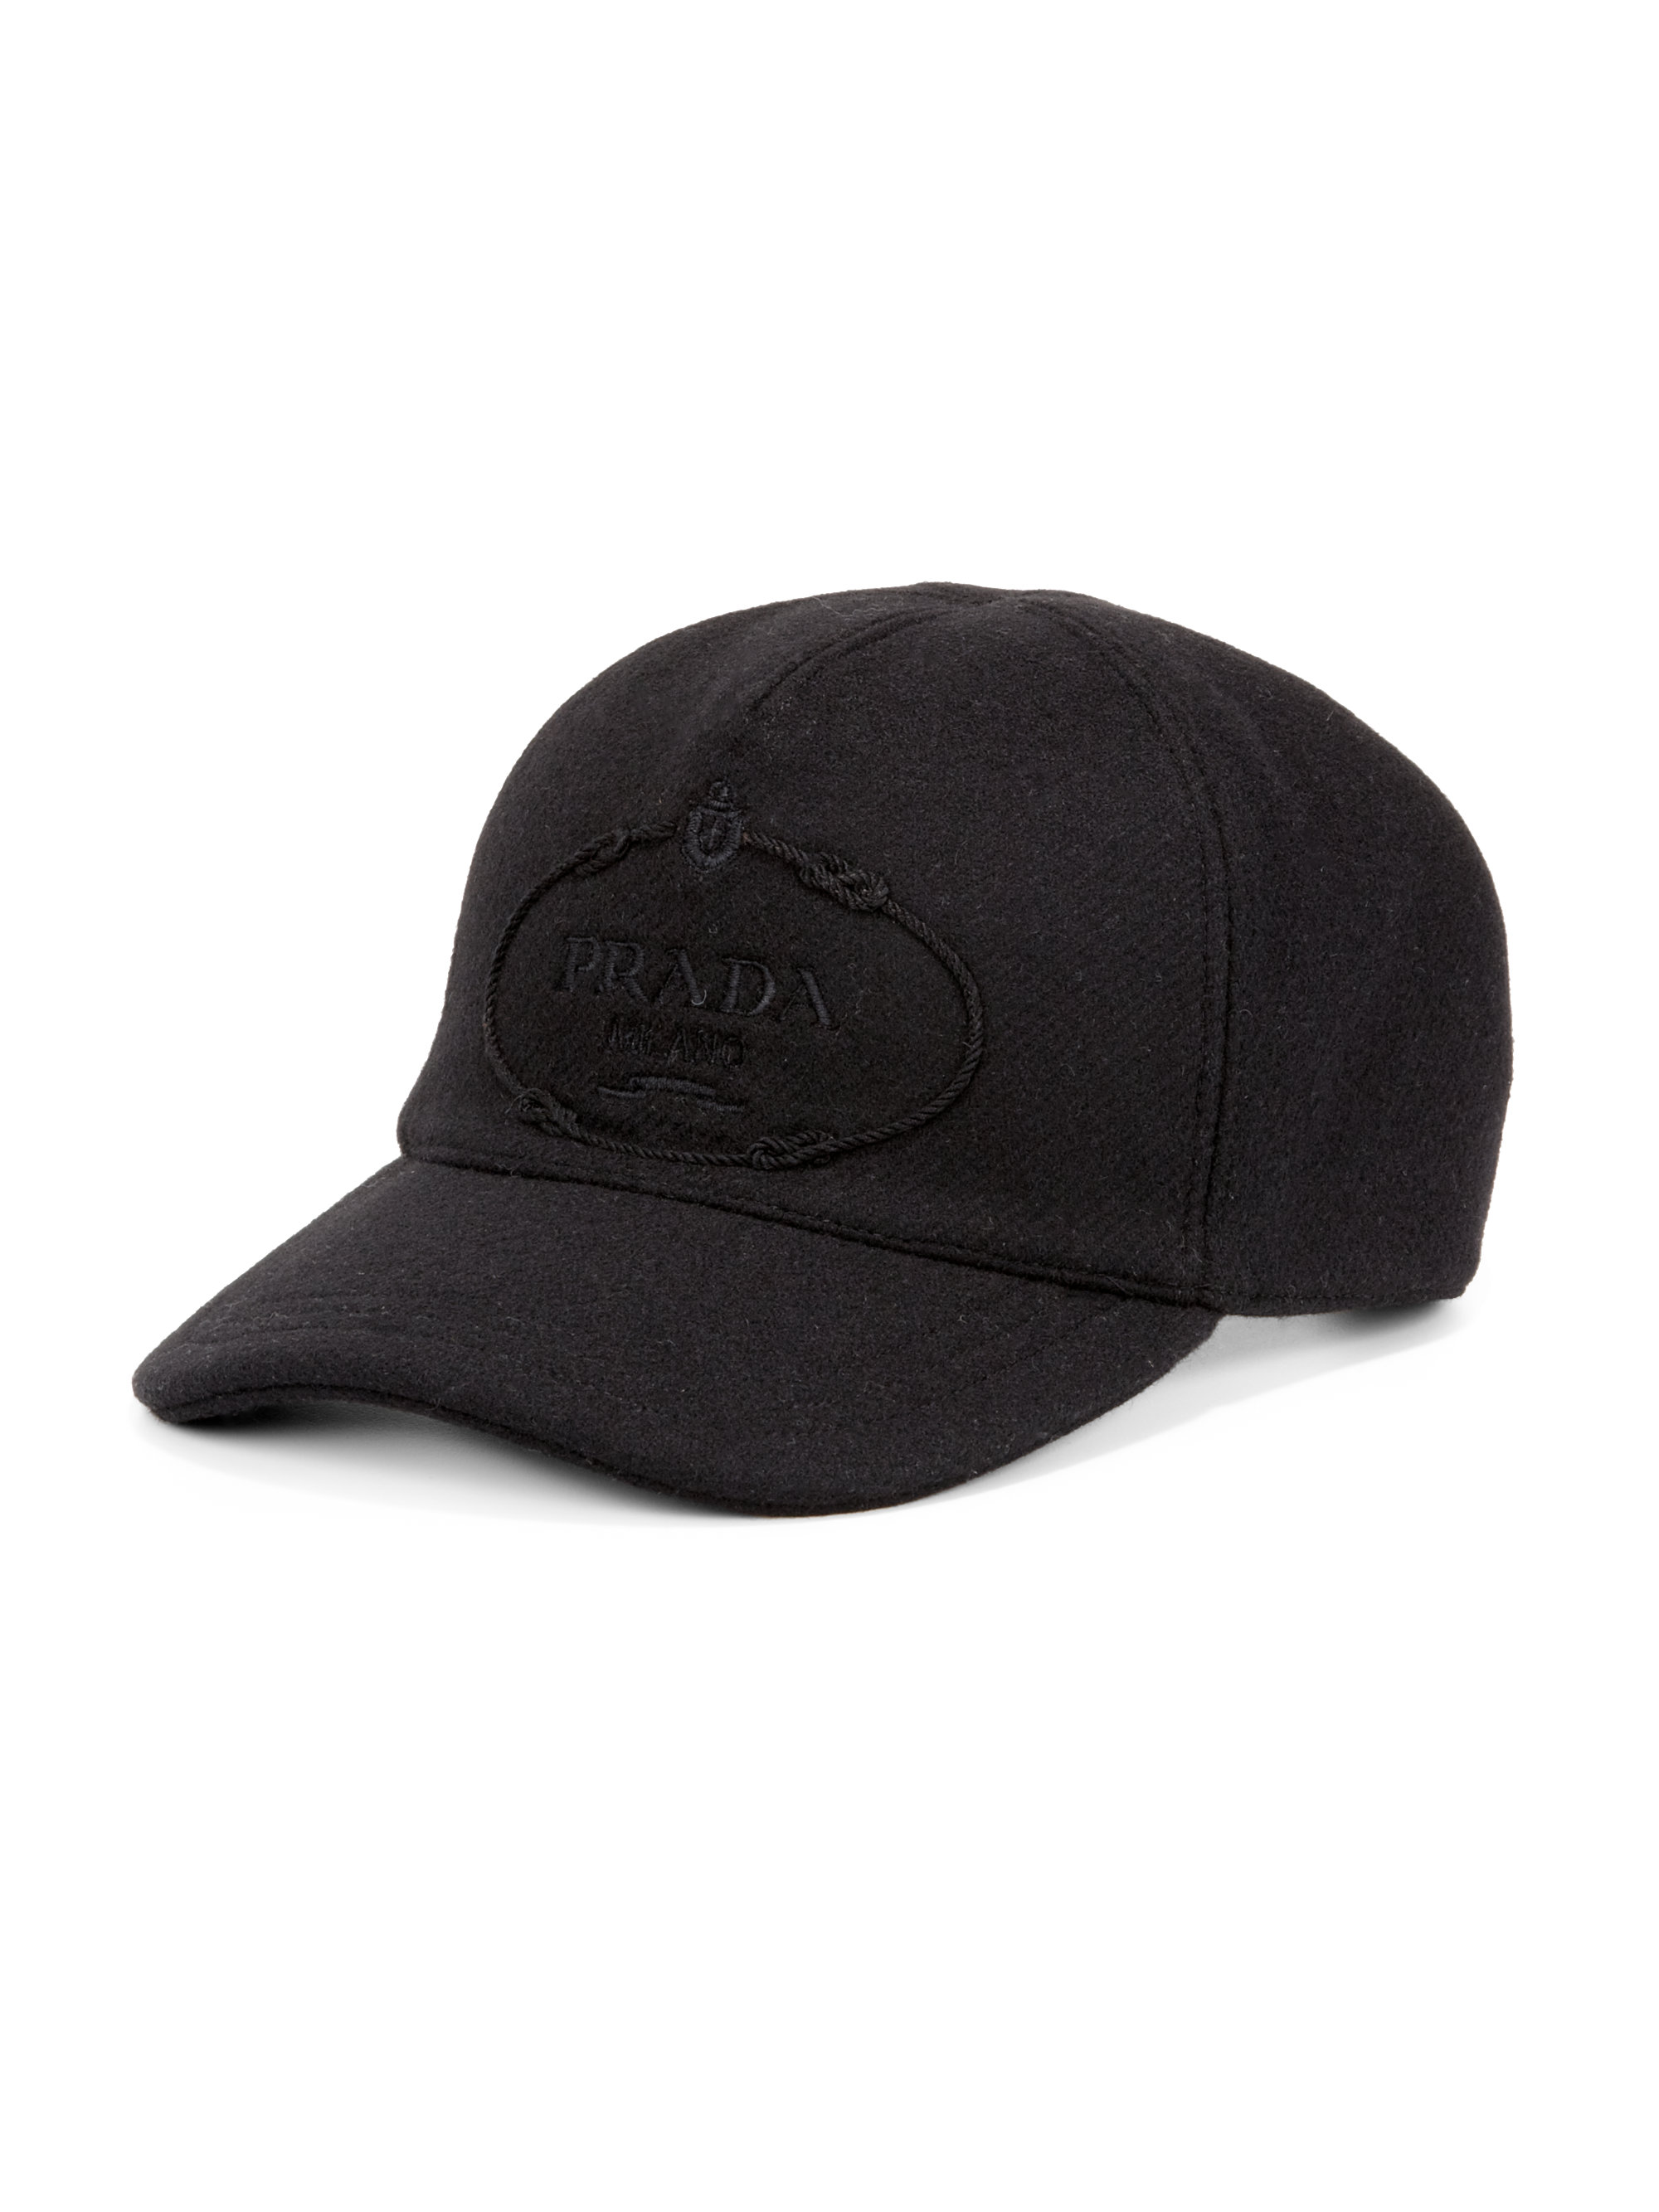 Prada Wool Logo Baseball Cap In Black For Men Lyst